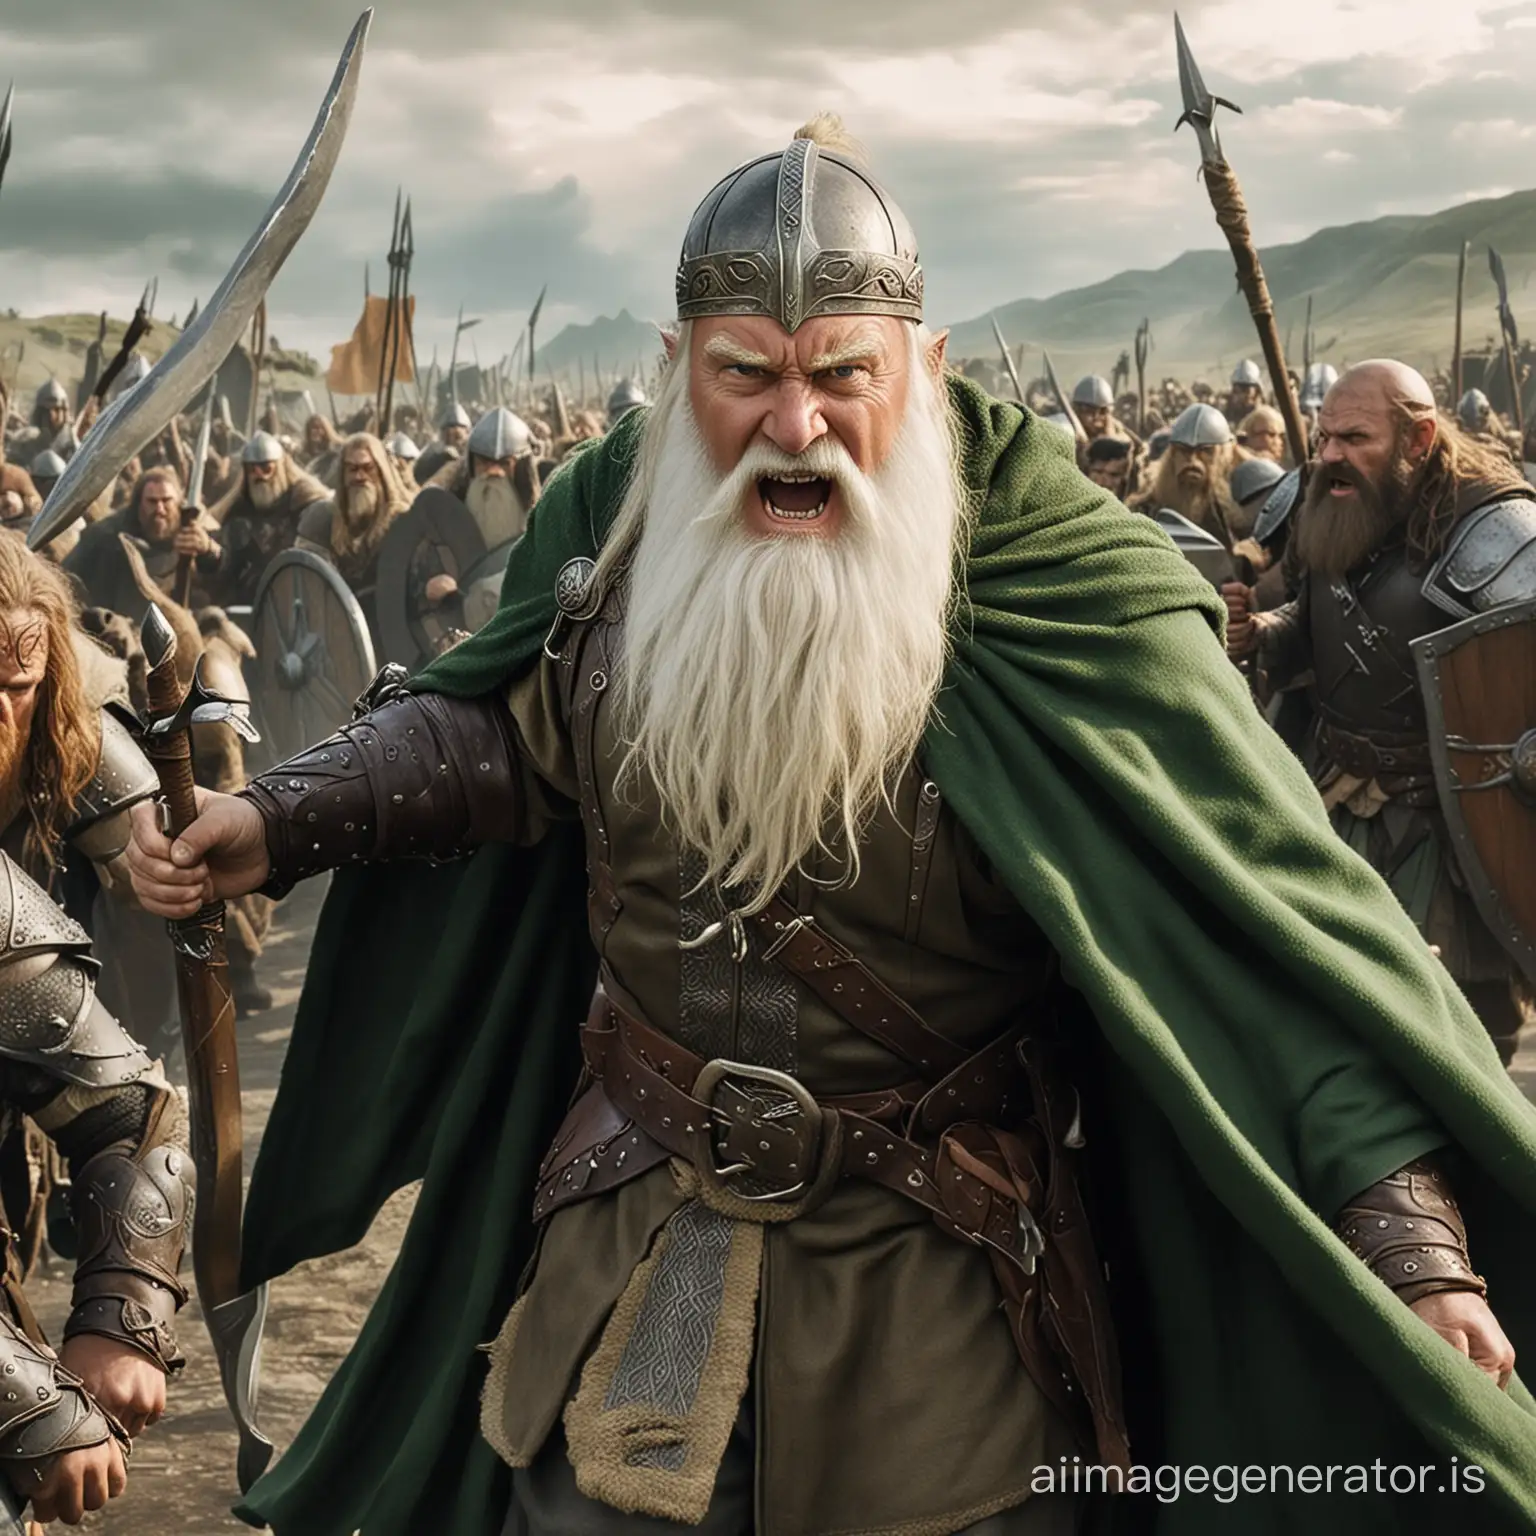 Gimli-Dwarf-Warrior-in-Epic-Battle-with-Orcs